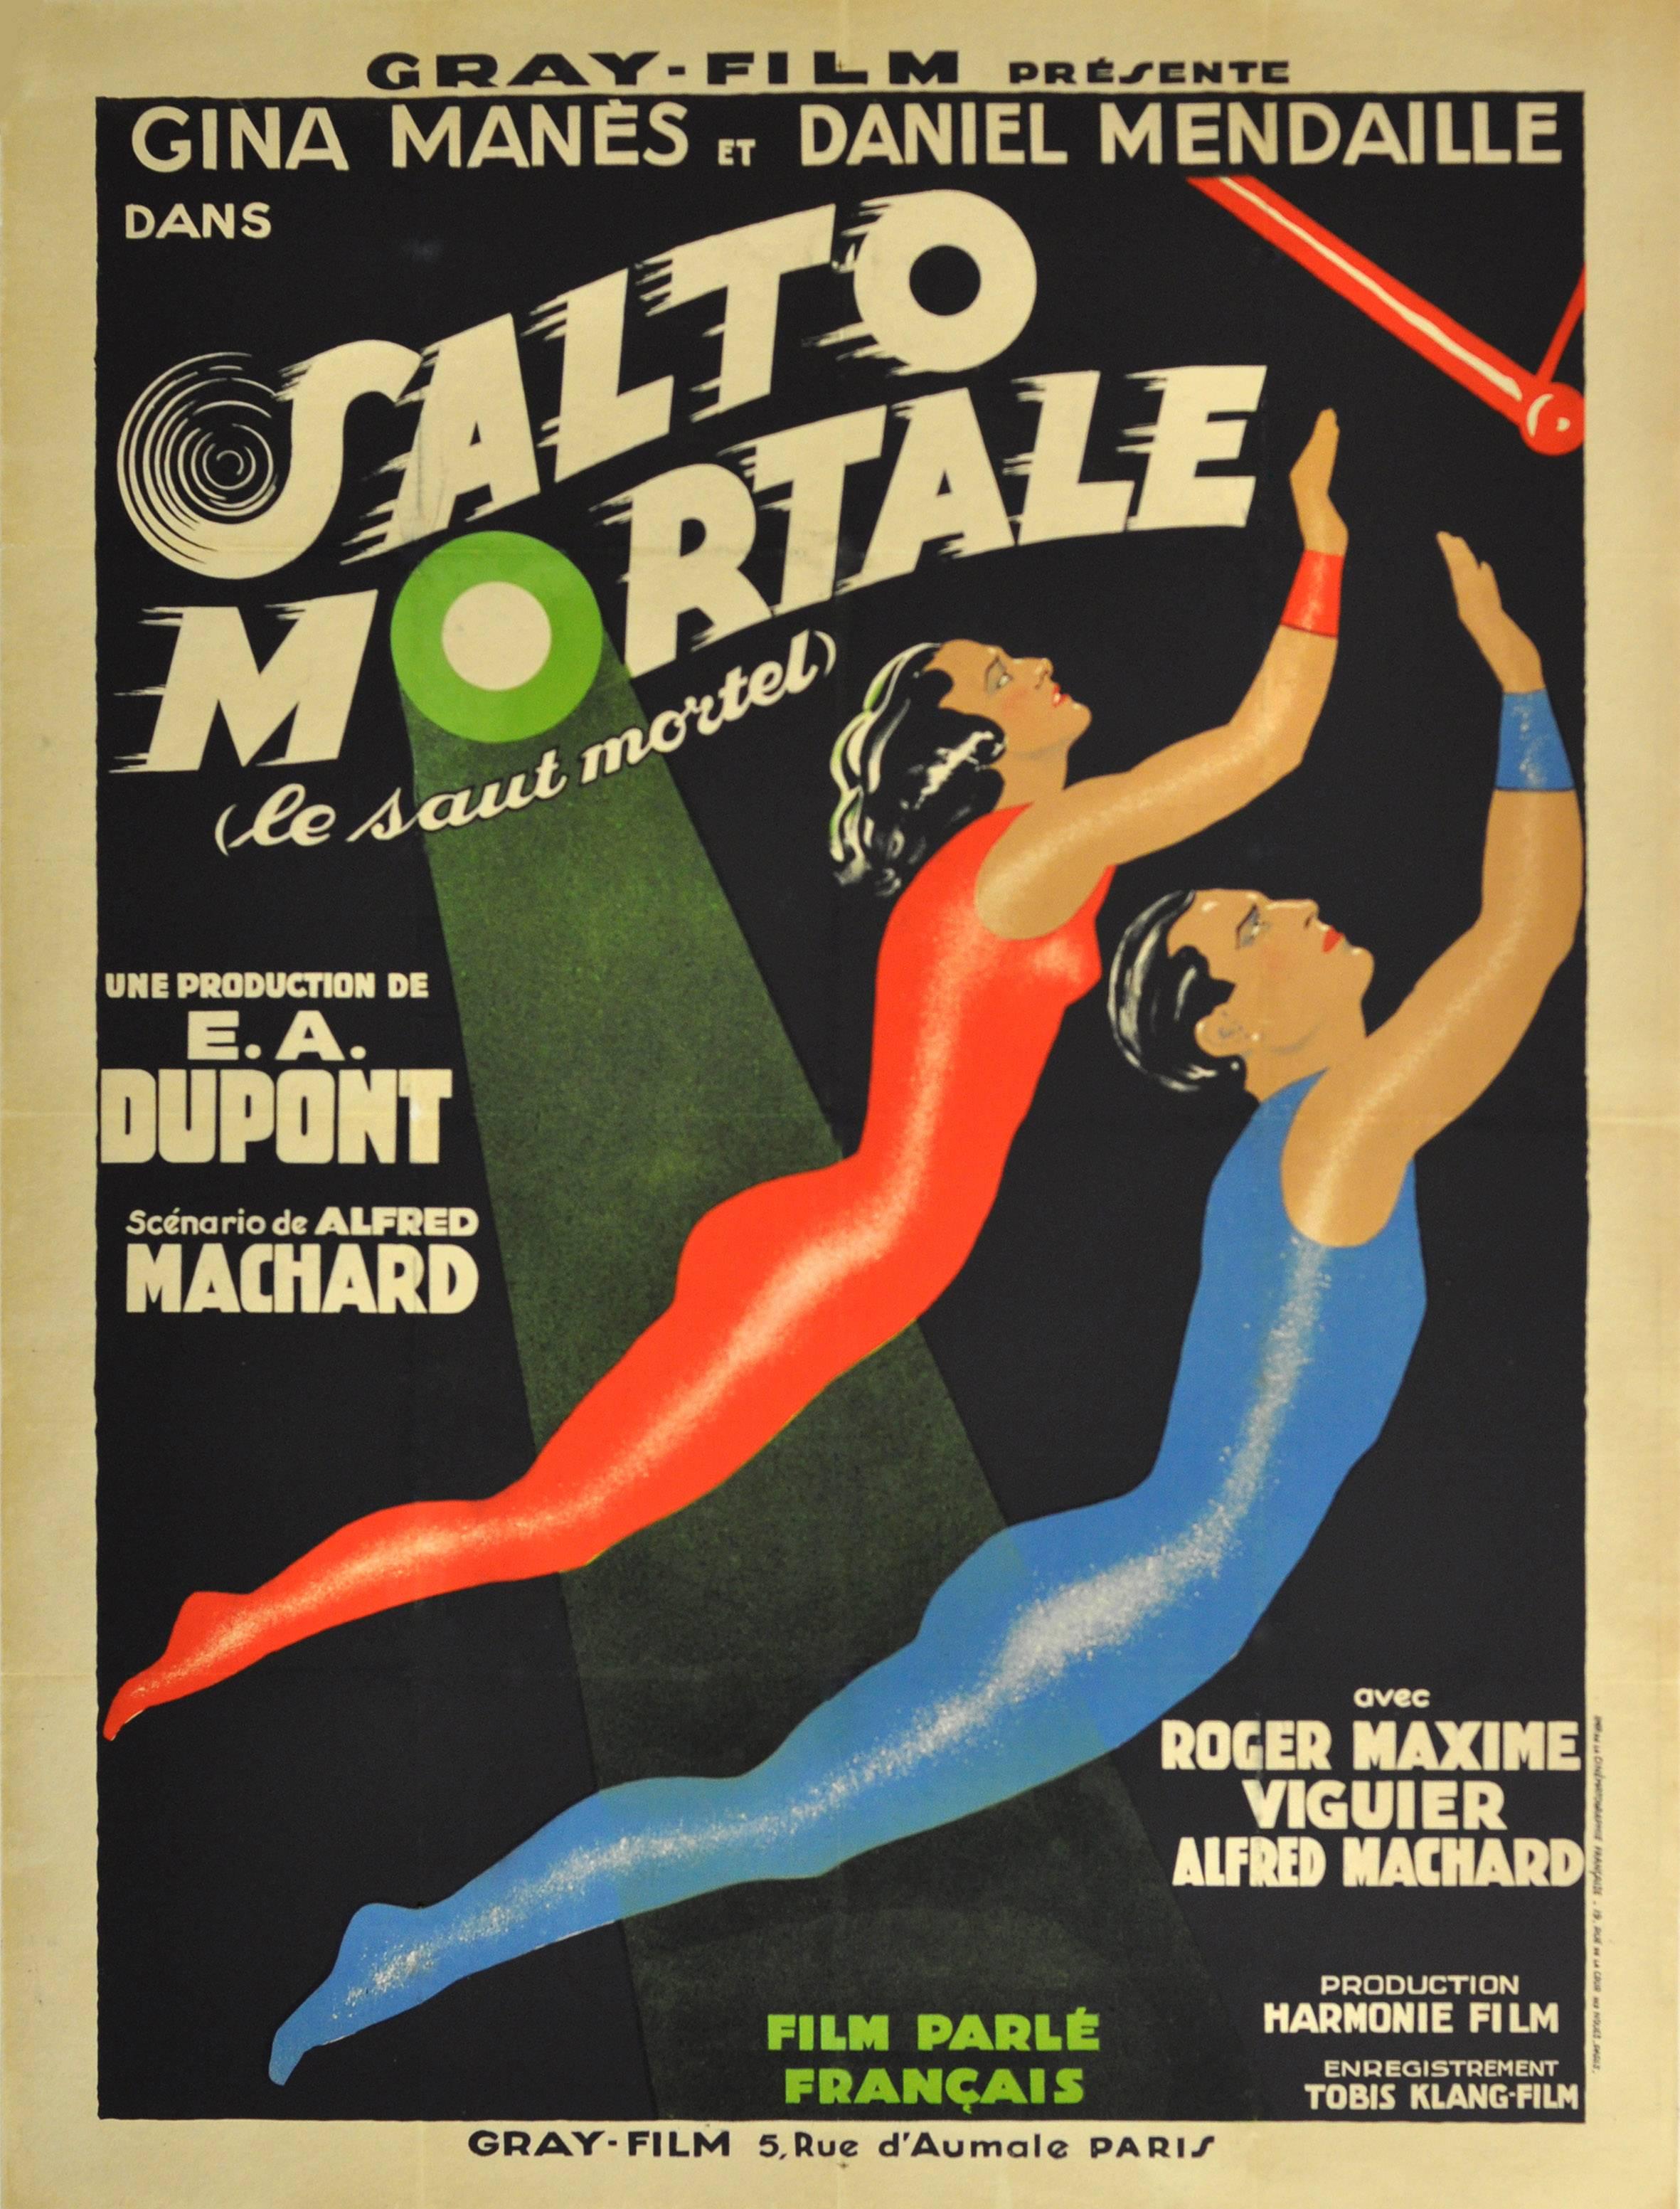 Unknown Print - Original Circus Movie Poster For Salto Mortale Saut Mortel / Trapeze Fatal Leap